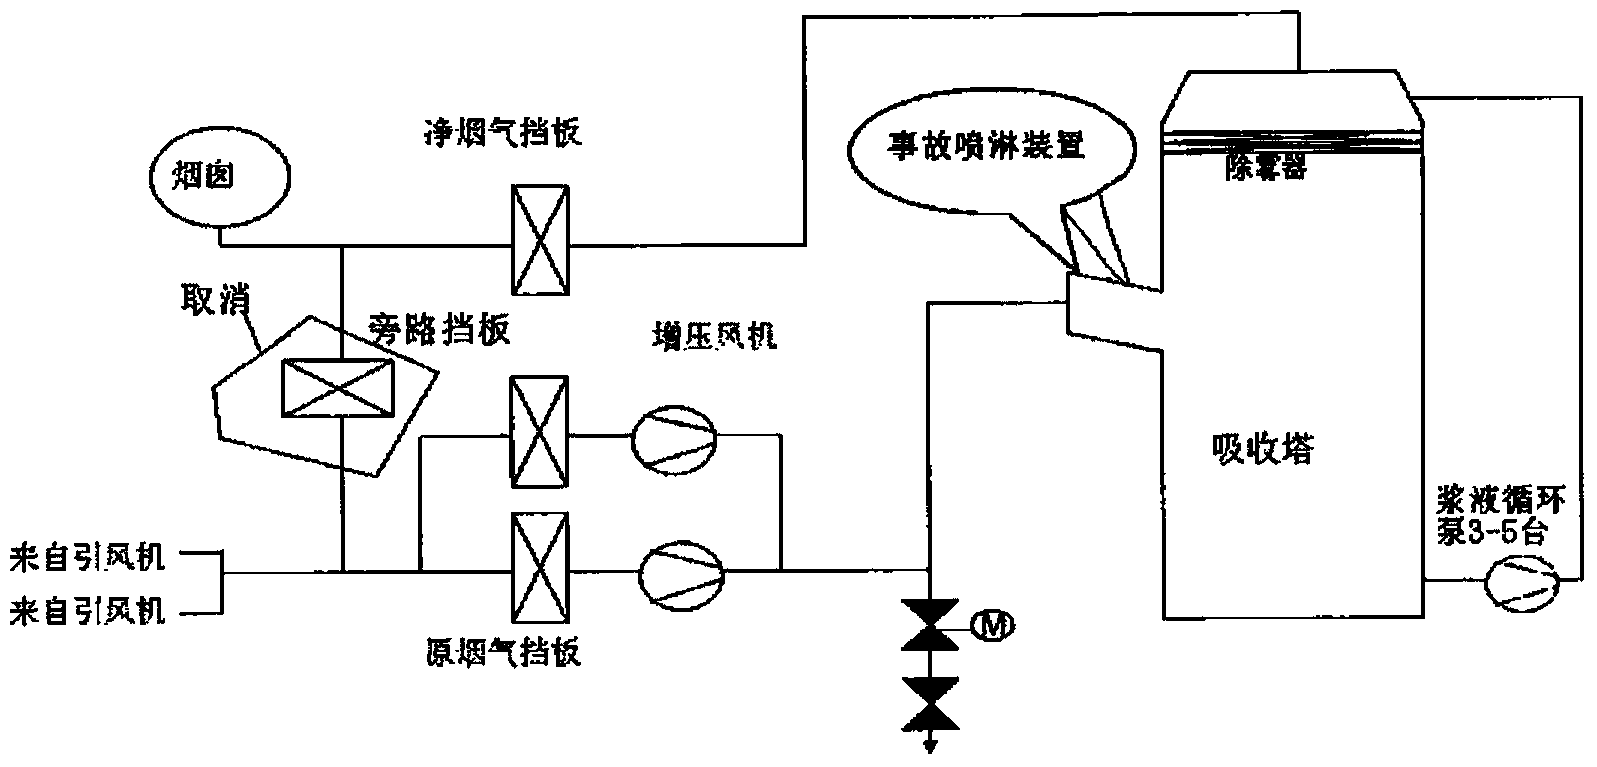 Slurry circulating pump RB control method of thermal power generating unit